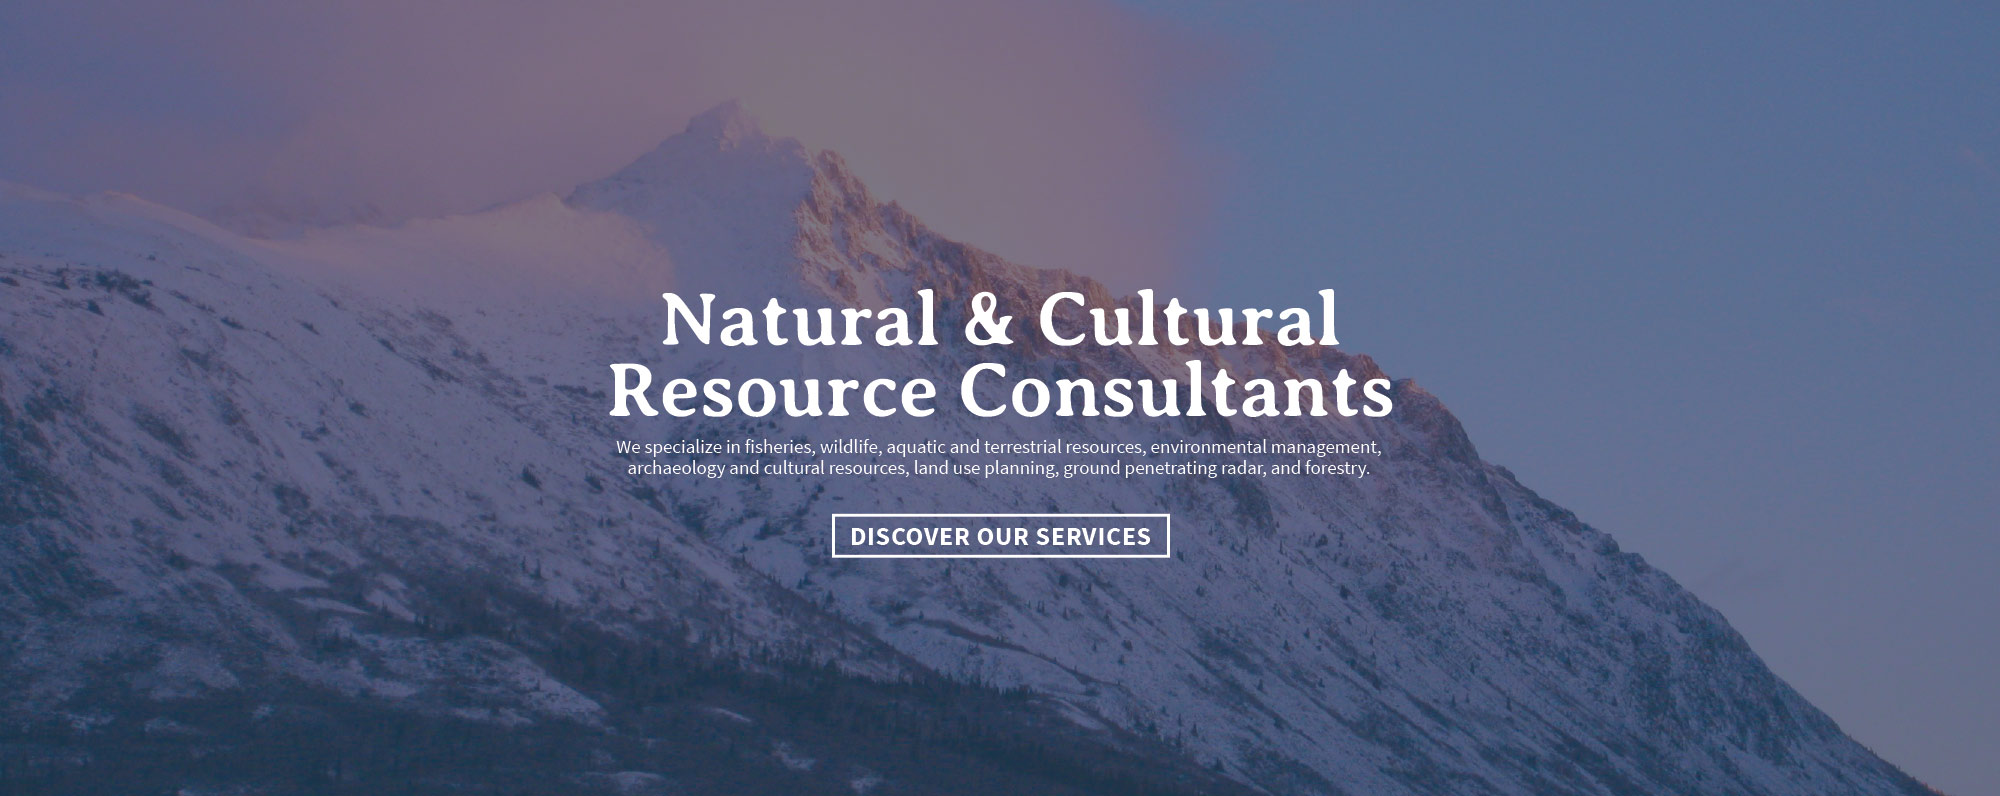 Homepage Slide 3 - Natural & Cultural